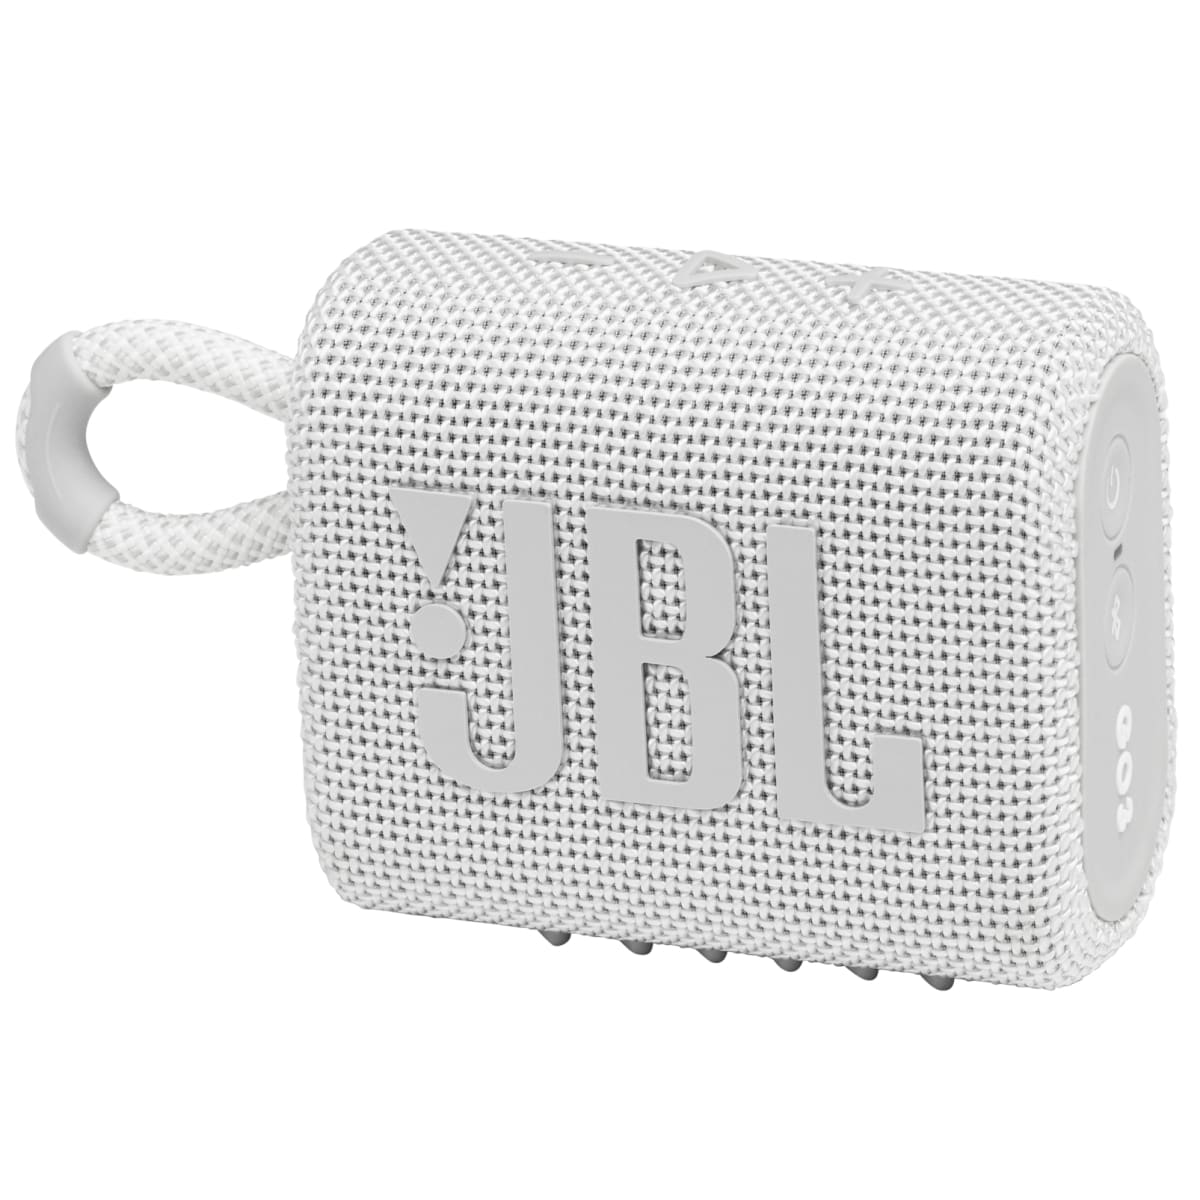 JBL GO 3 Portable Waterproof Speaker - Bluetooth